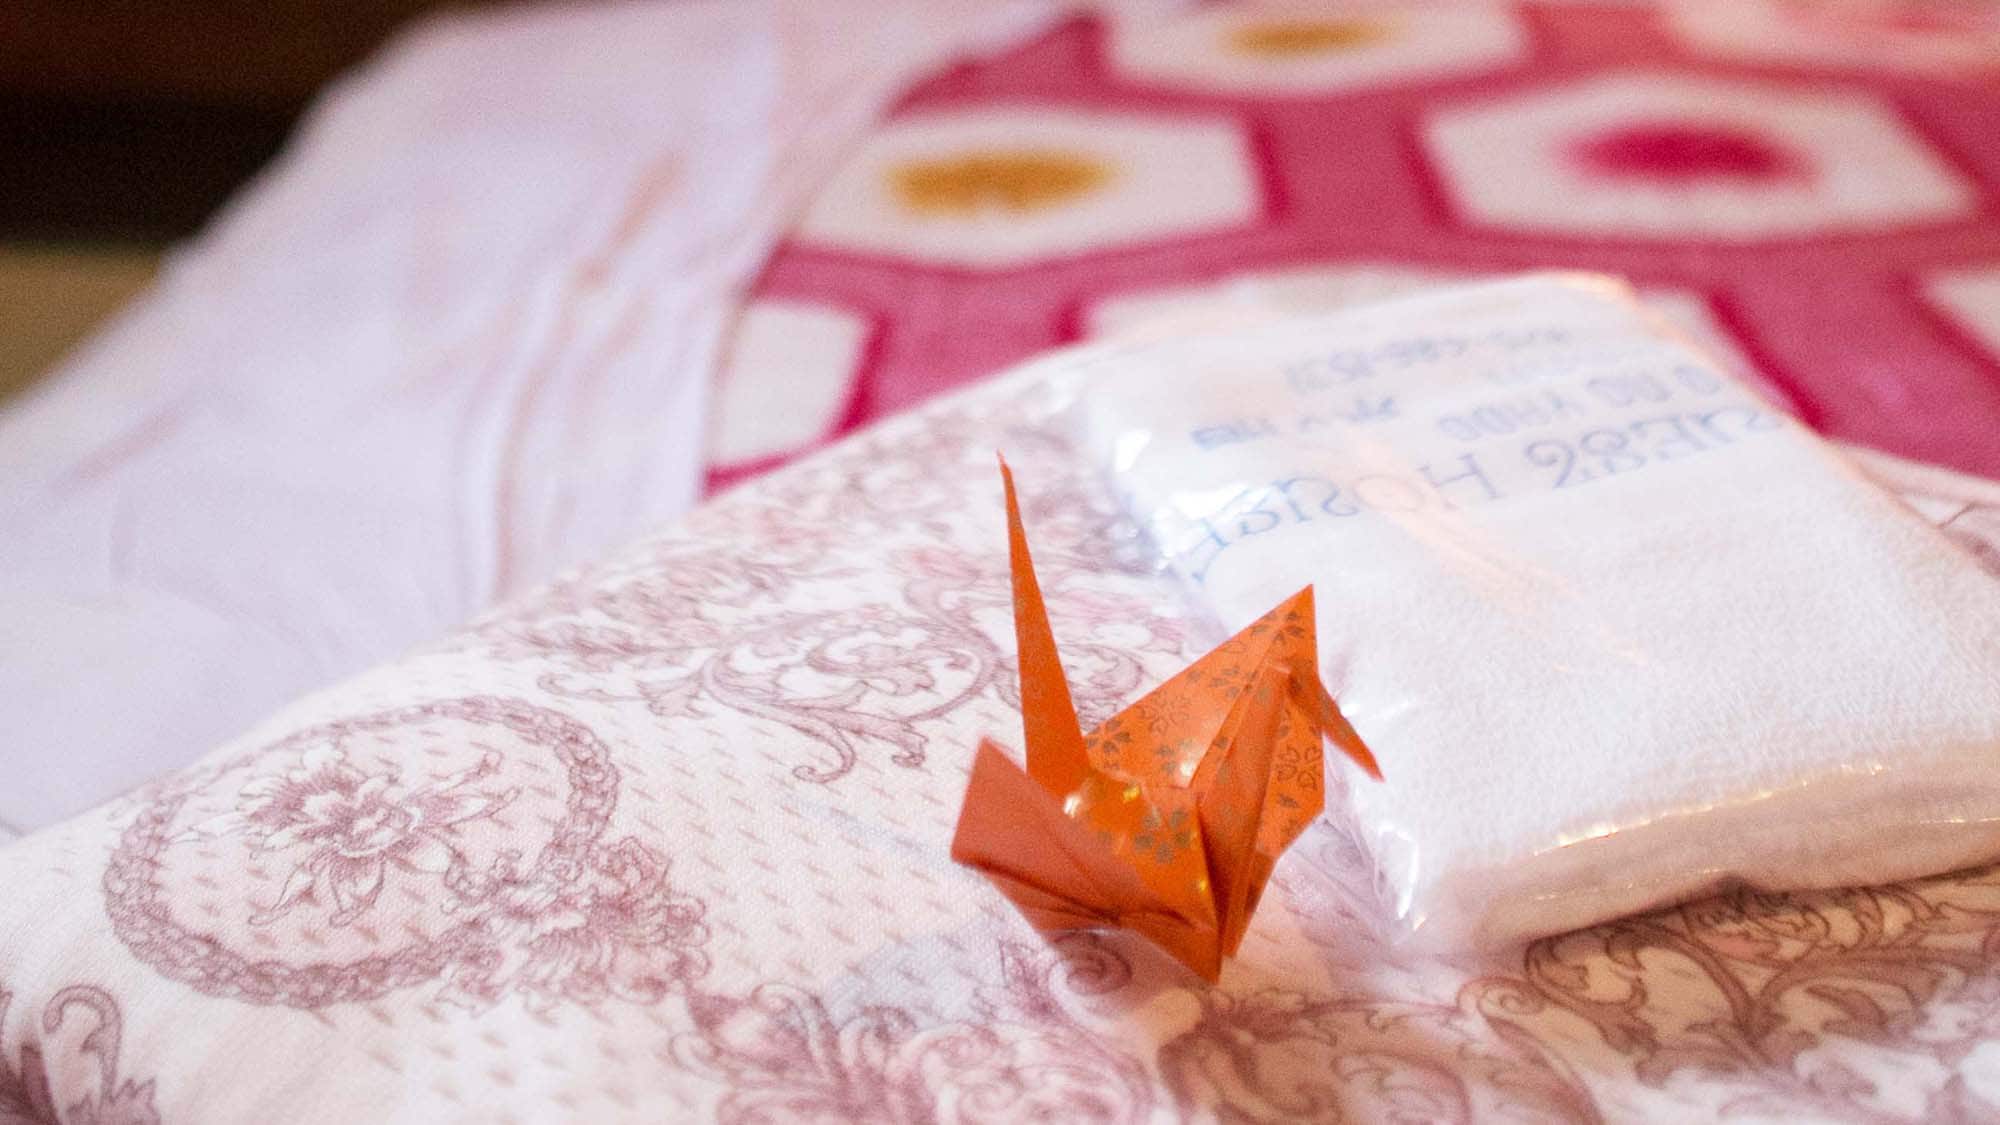 ・ [Sakura] Hospitality with a thousand paper cranes ♪